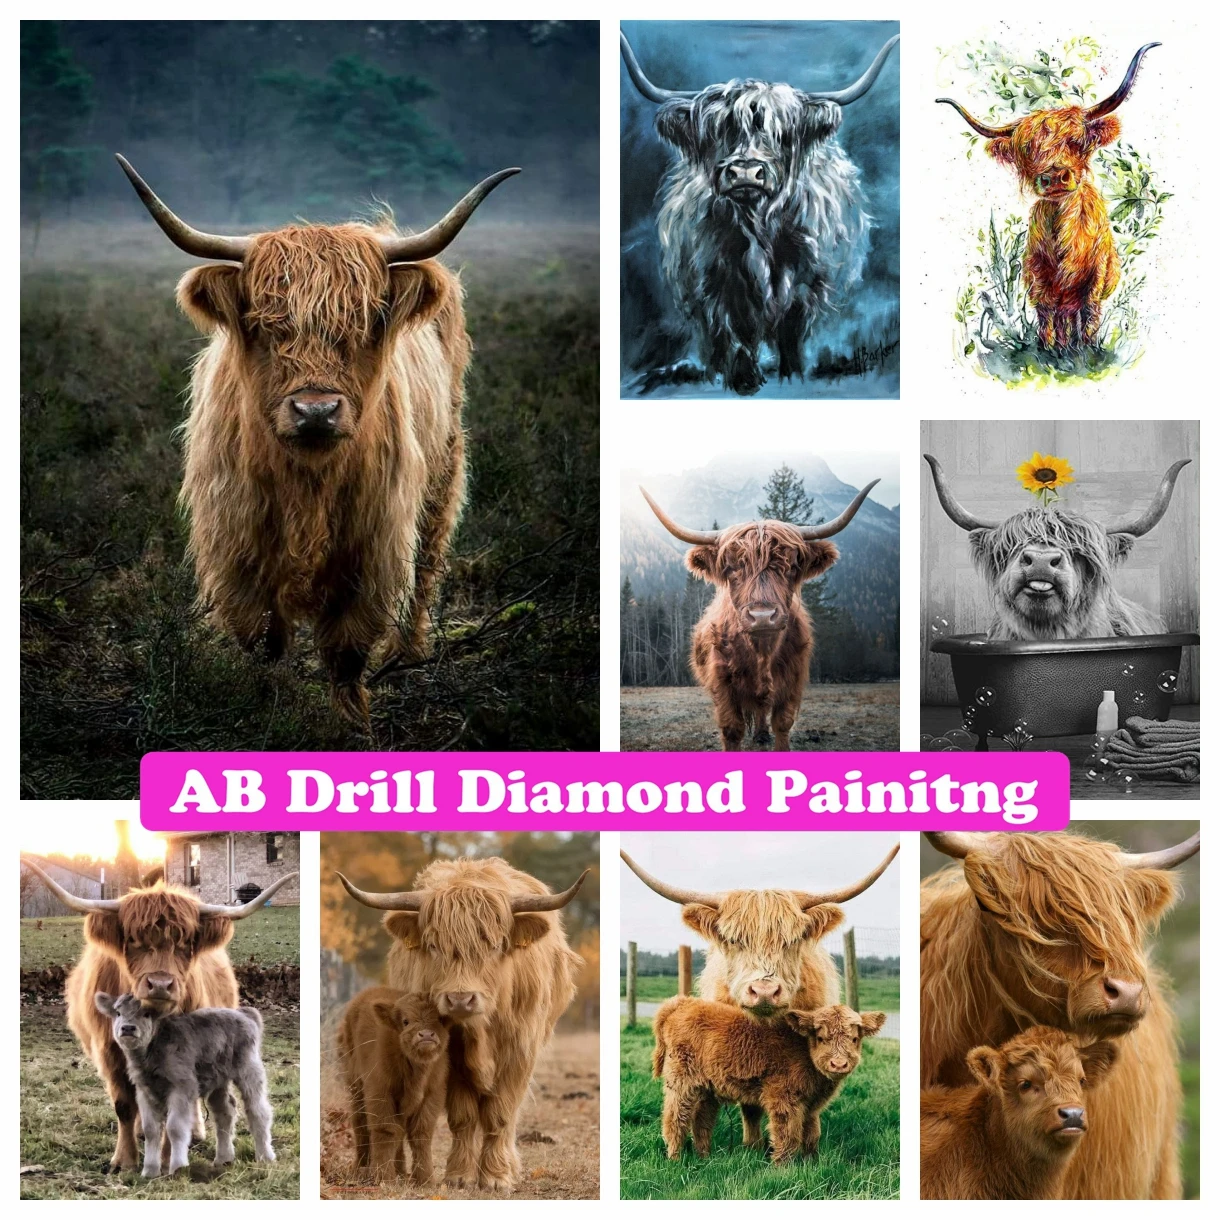 Highland Cow Diamond Painting Kits for Adults, Sunflower Diamond